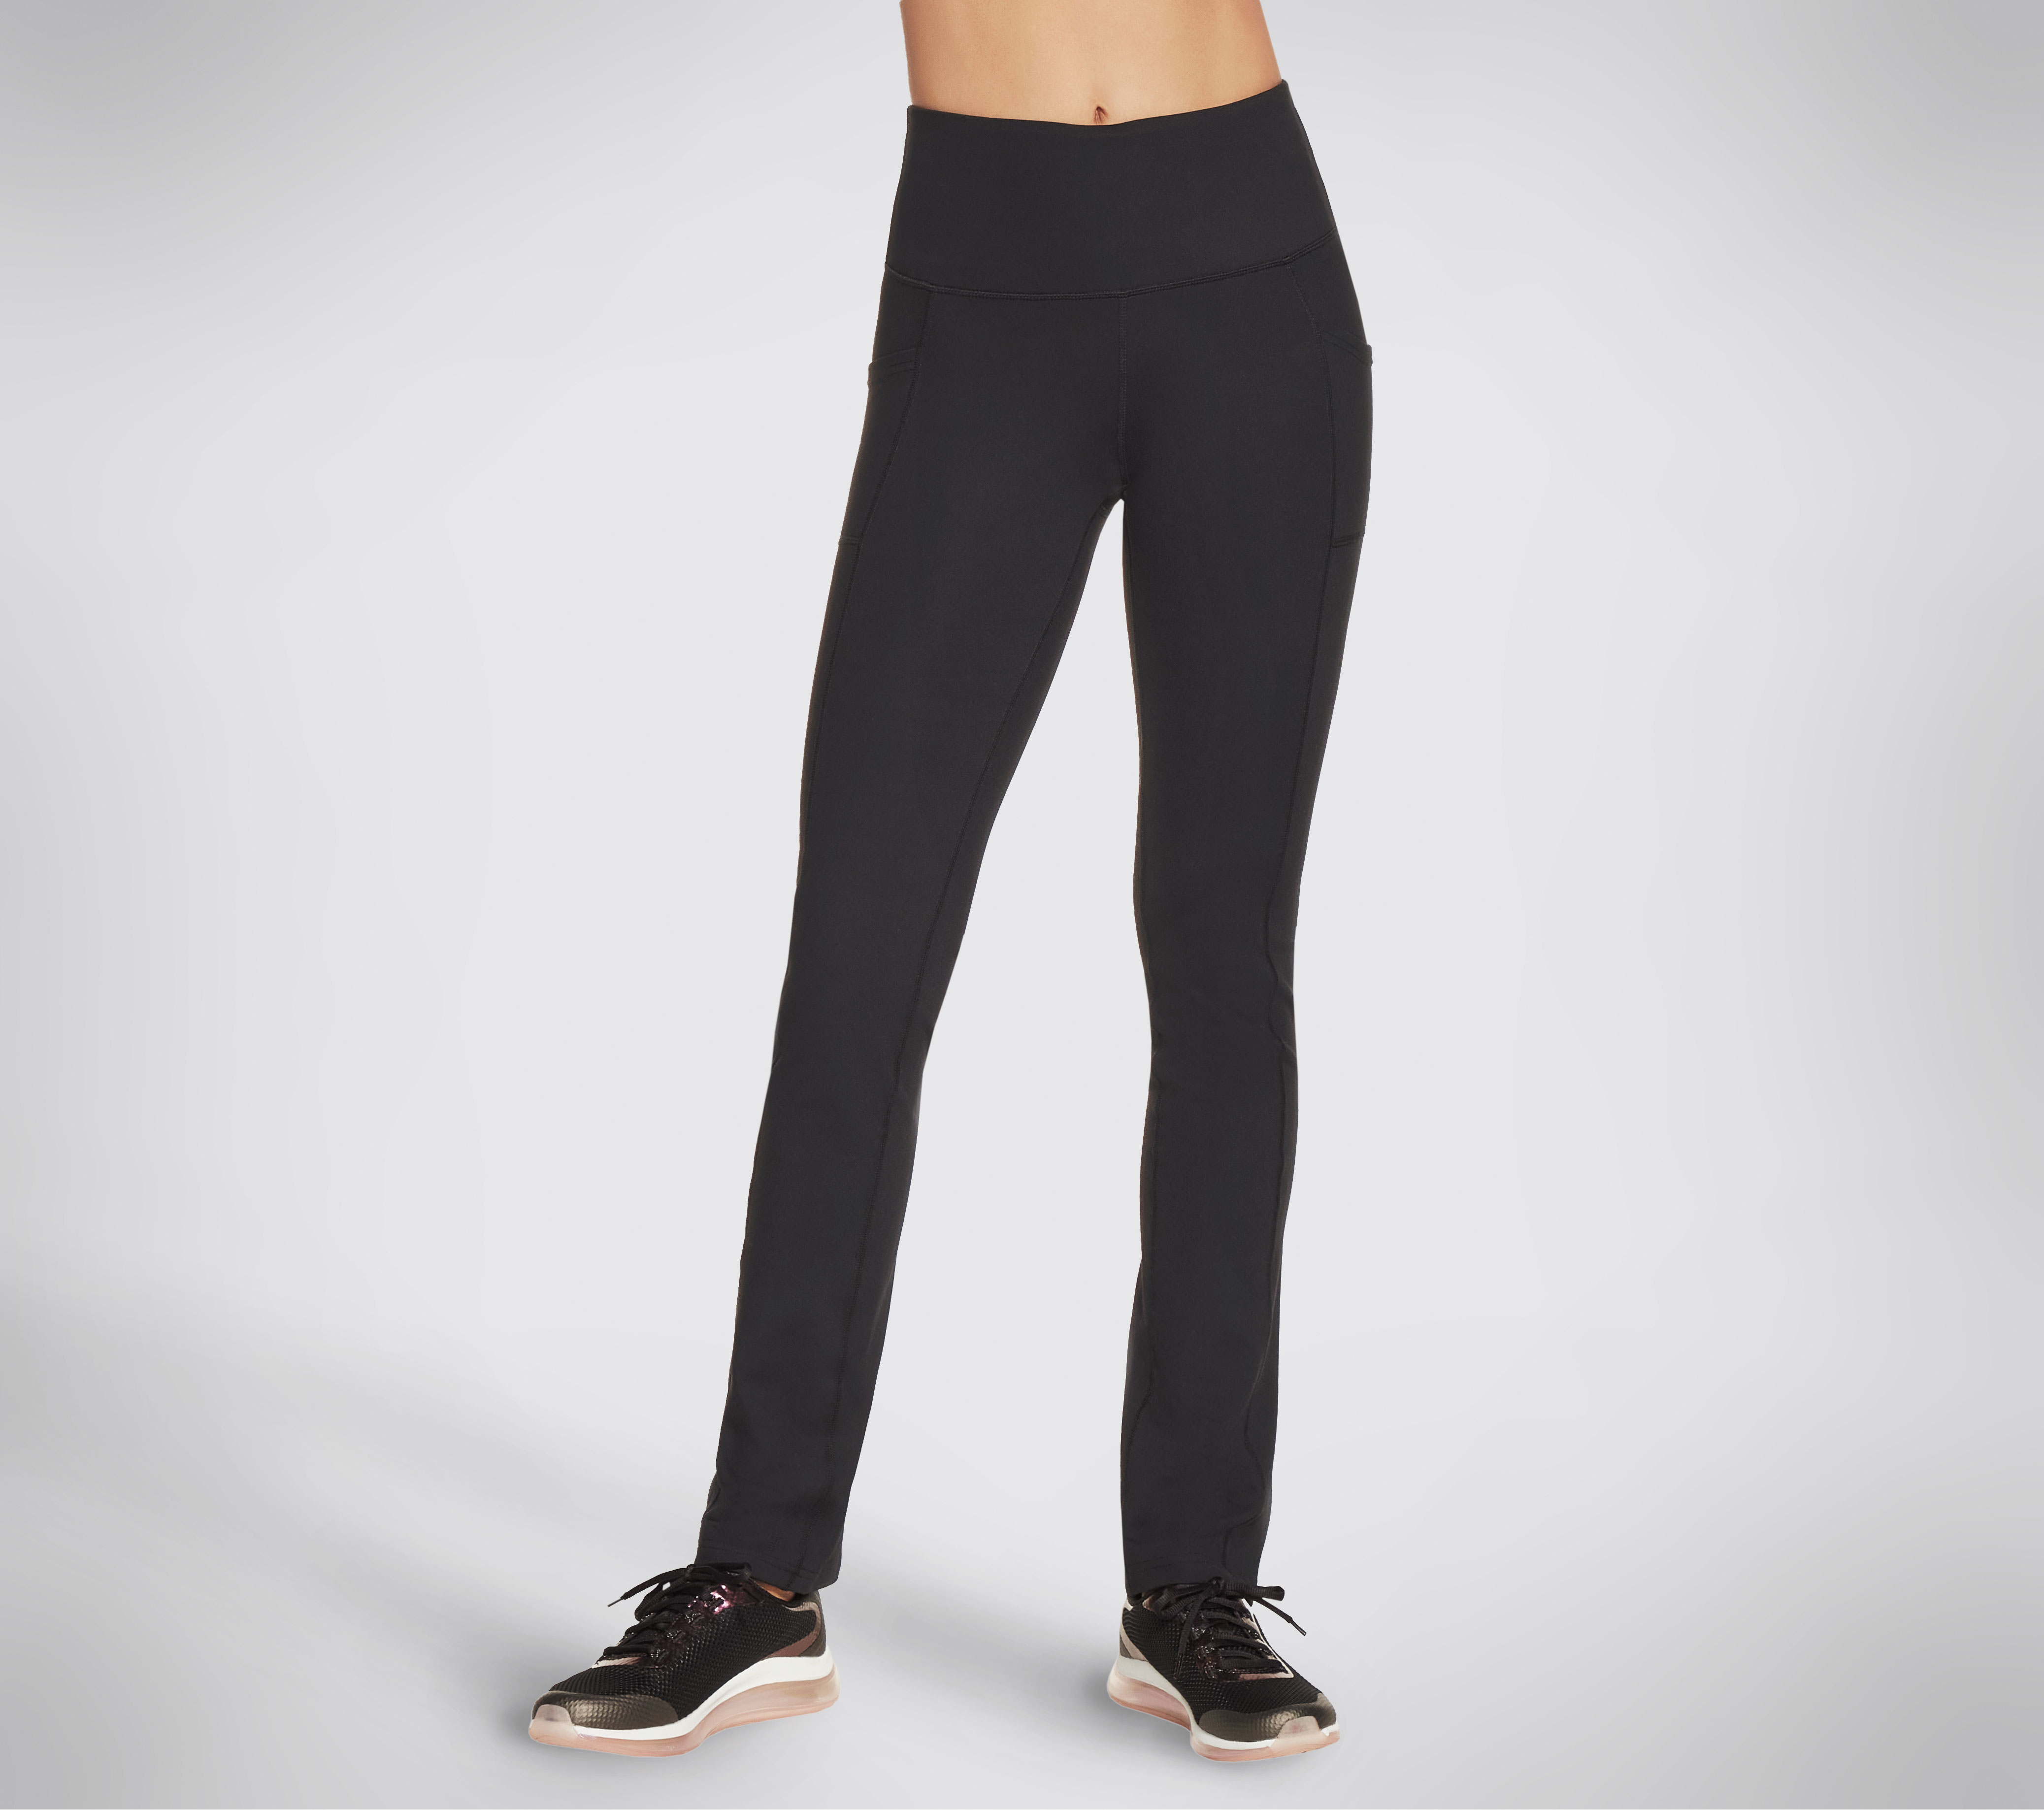 Skechers Women's GO WALK Joy Pants Petite Length Size Small Black Nylon/Spandex